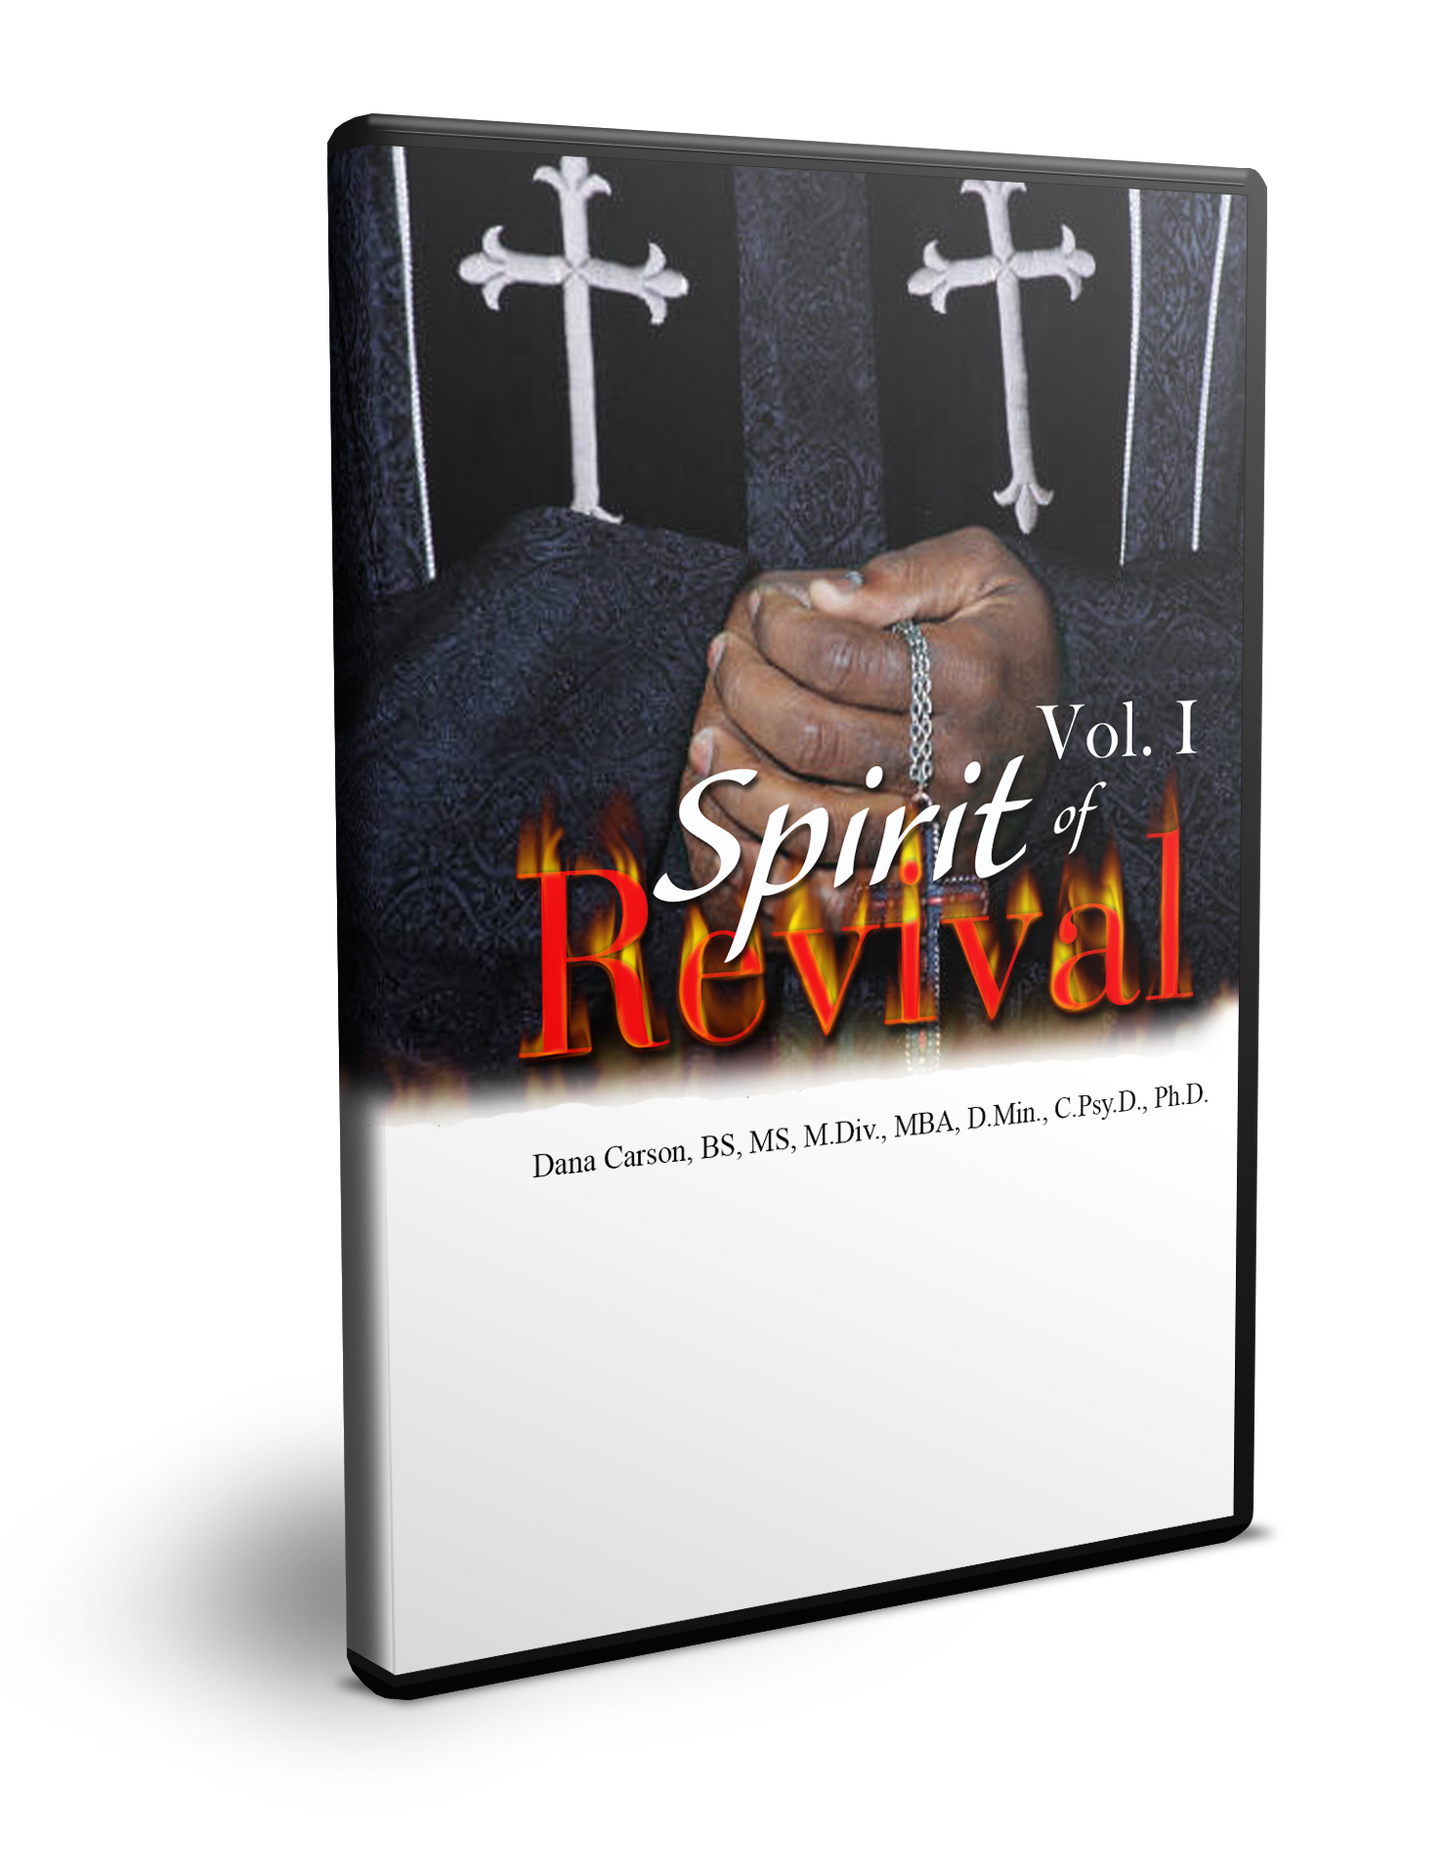 The Spirit of Revival Vol. 1 Series